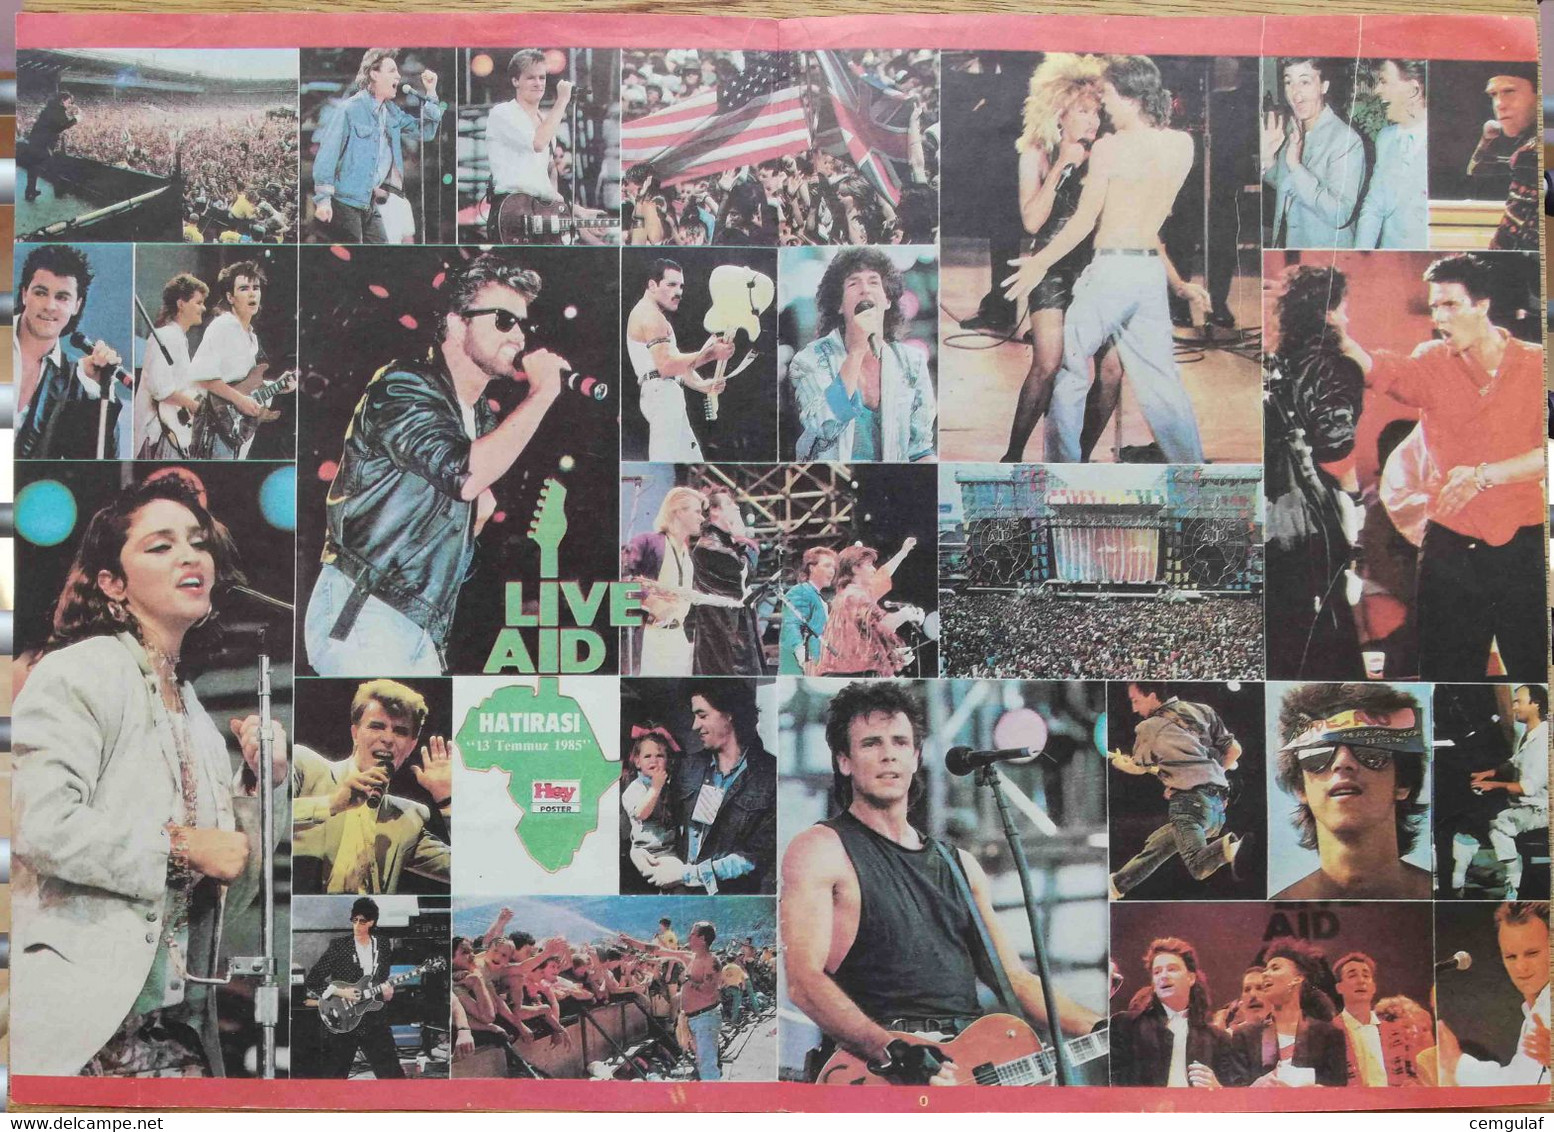 LIVE AID+MARILLION+PAUL HARDCASTLE POSTER 13 JUNE 1985 - Affiches & Posters